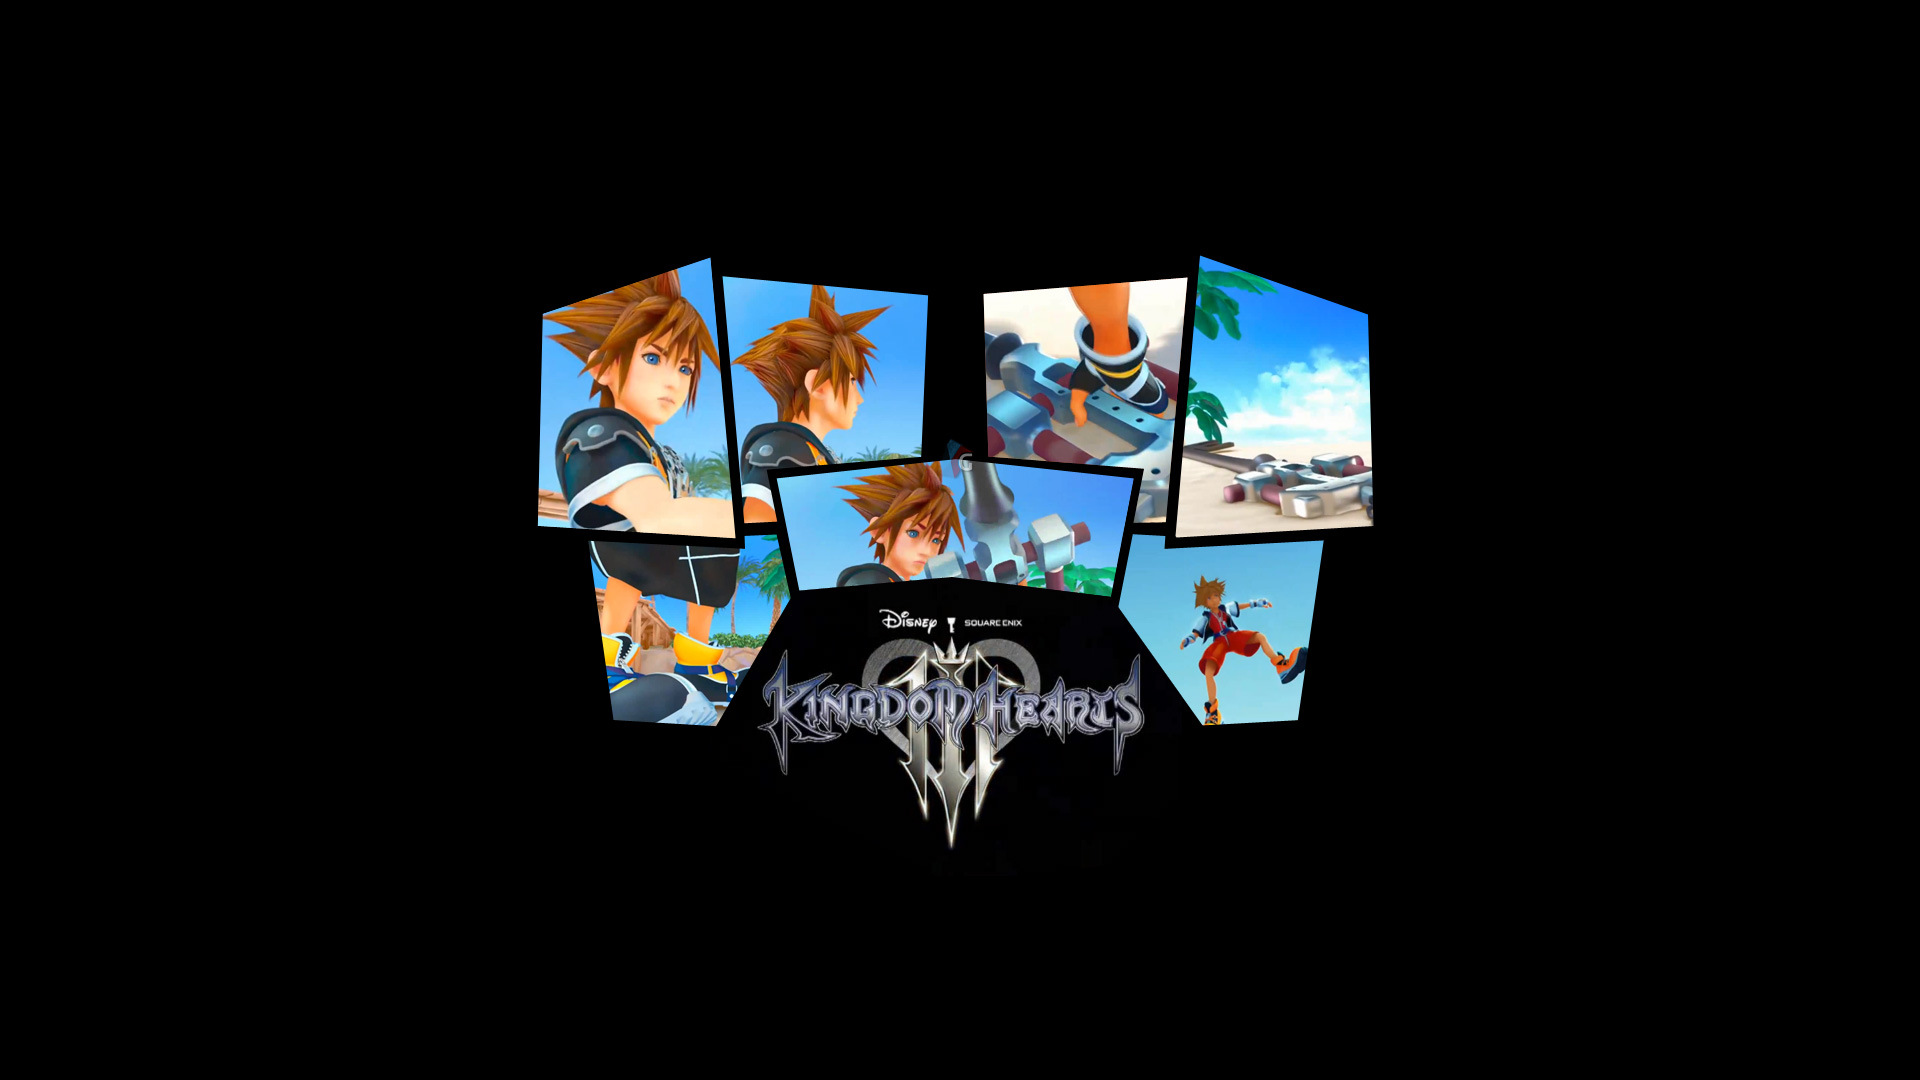 Download Kingdom Hearts 3 Wallpaper 1080p Download link 720p